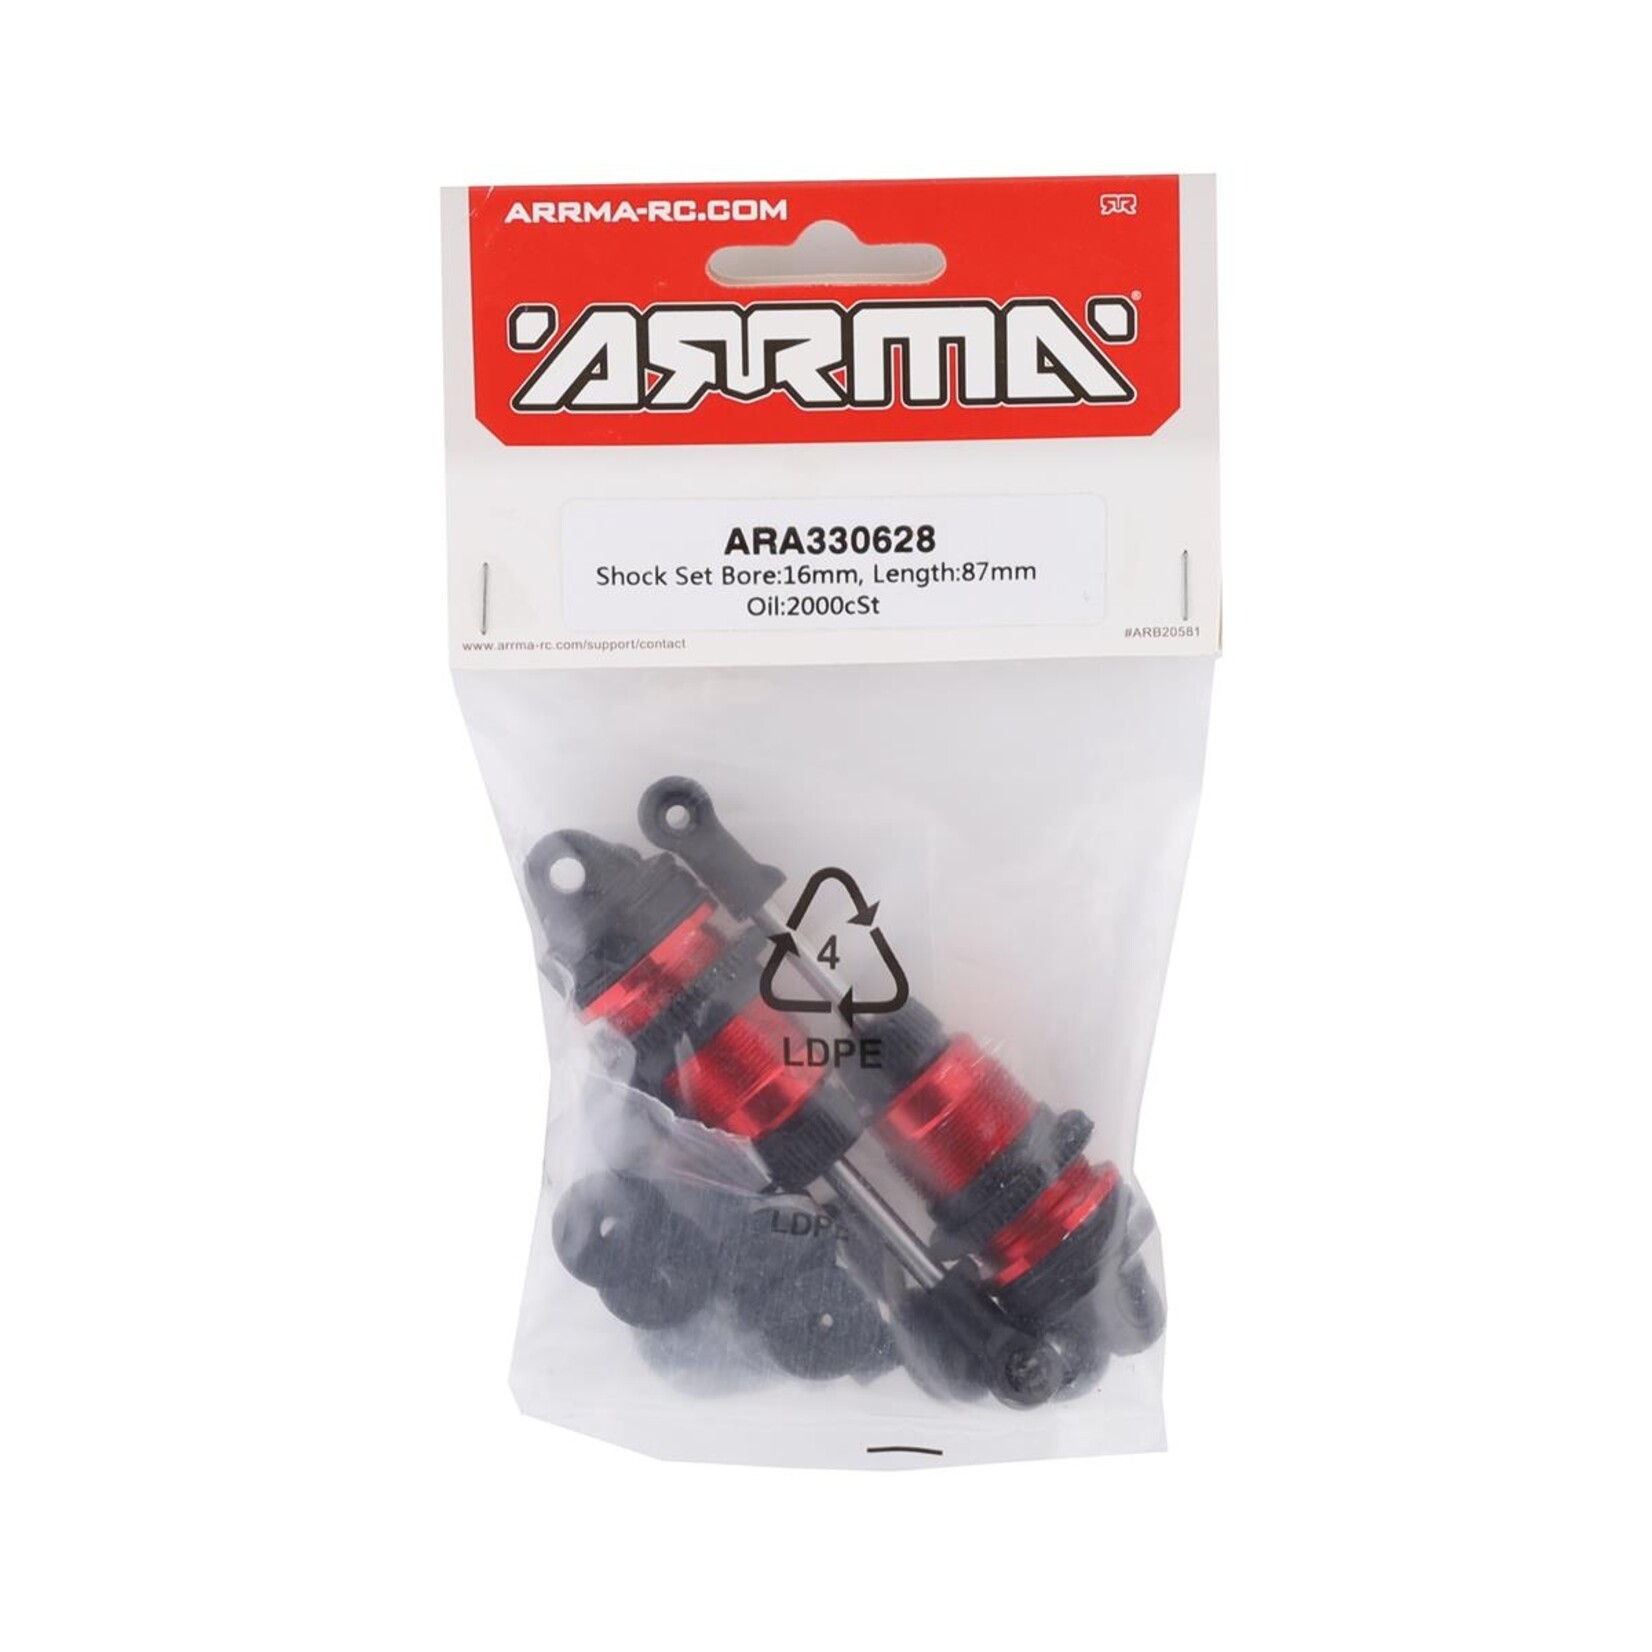 ARRMA Arrma Infraction/Limitless 87mm Shock Set (2) (16mm Bore) #ARA330628